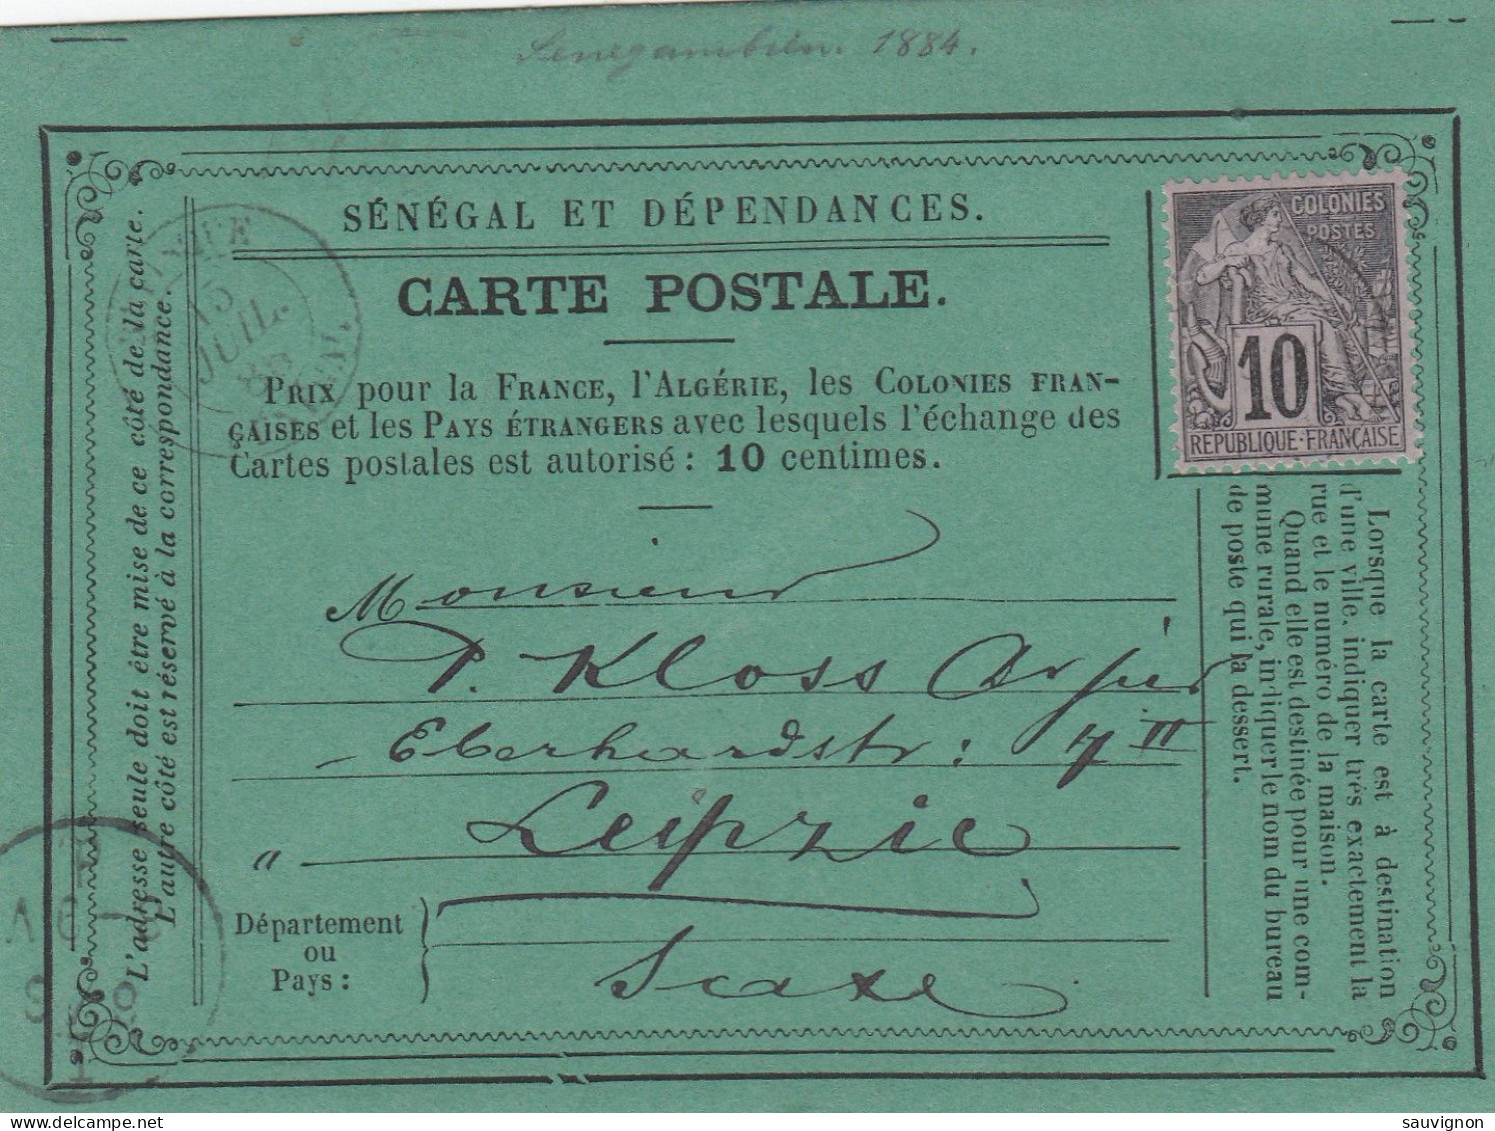 France. Senegal Et Dependances, Postcard From Rufique To Leipzig, Saxe, 15.7.1885 - Covers & Documents